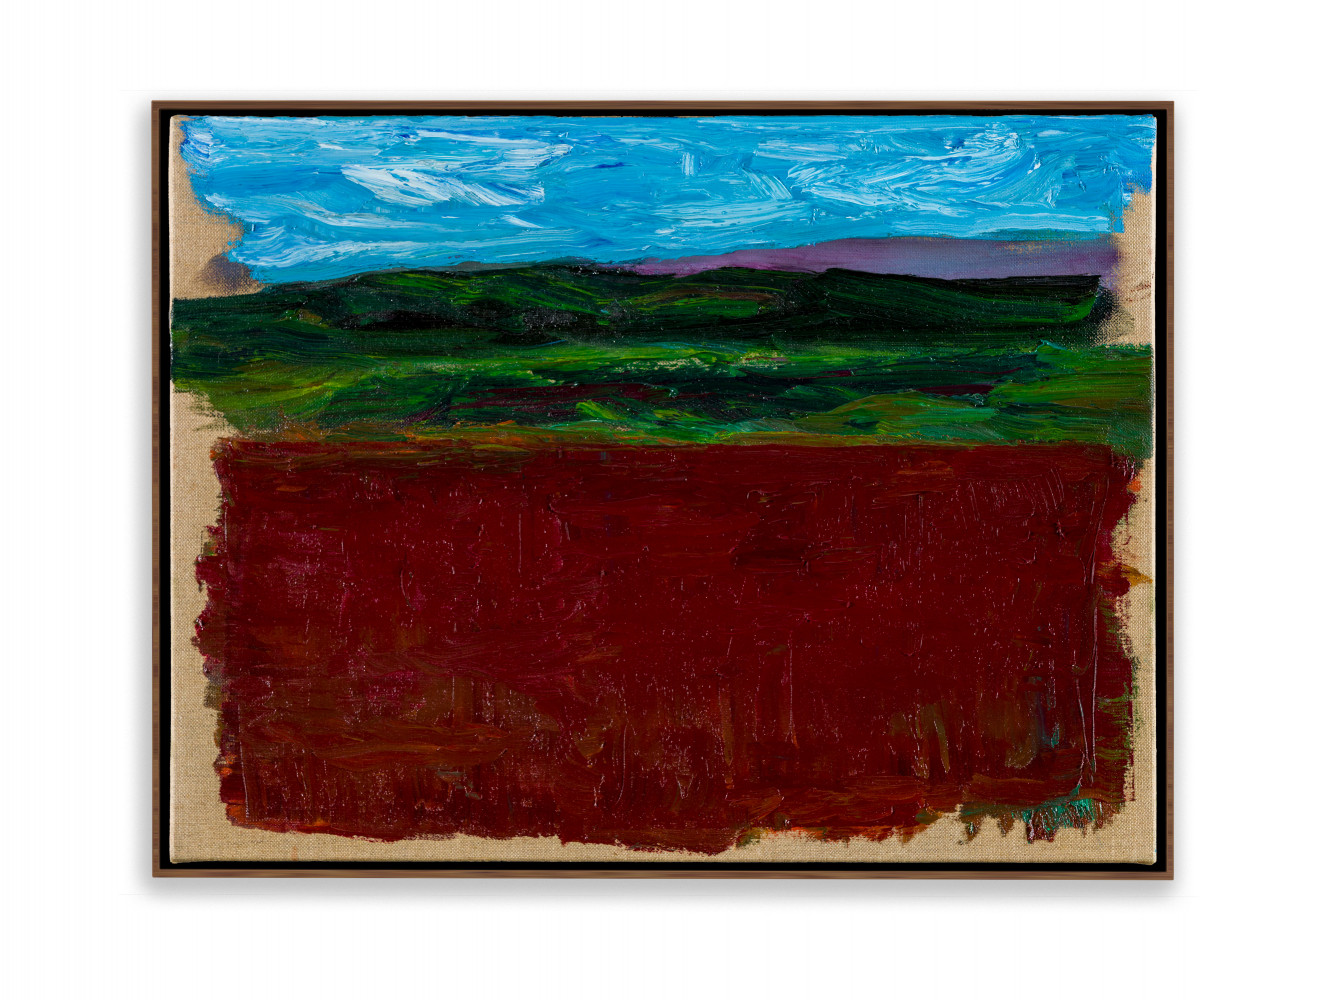 Pedro Cabrita Reis, ‘Landscapes (series XI) #2’, 2020, Öl auf roher Leinwand